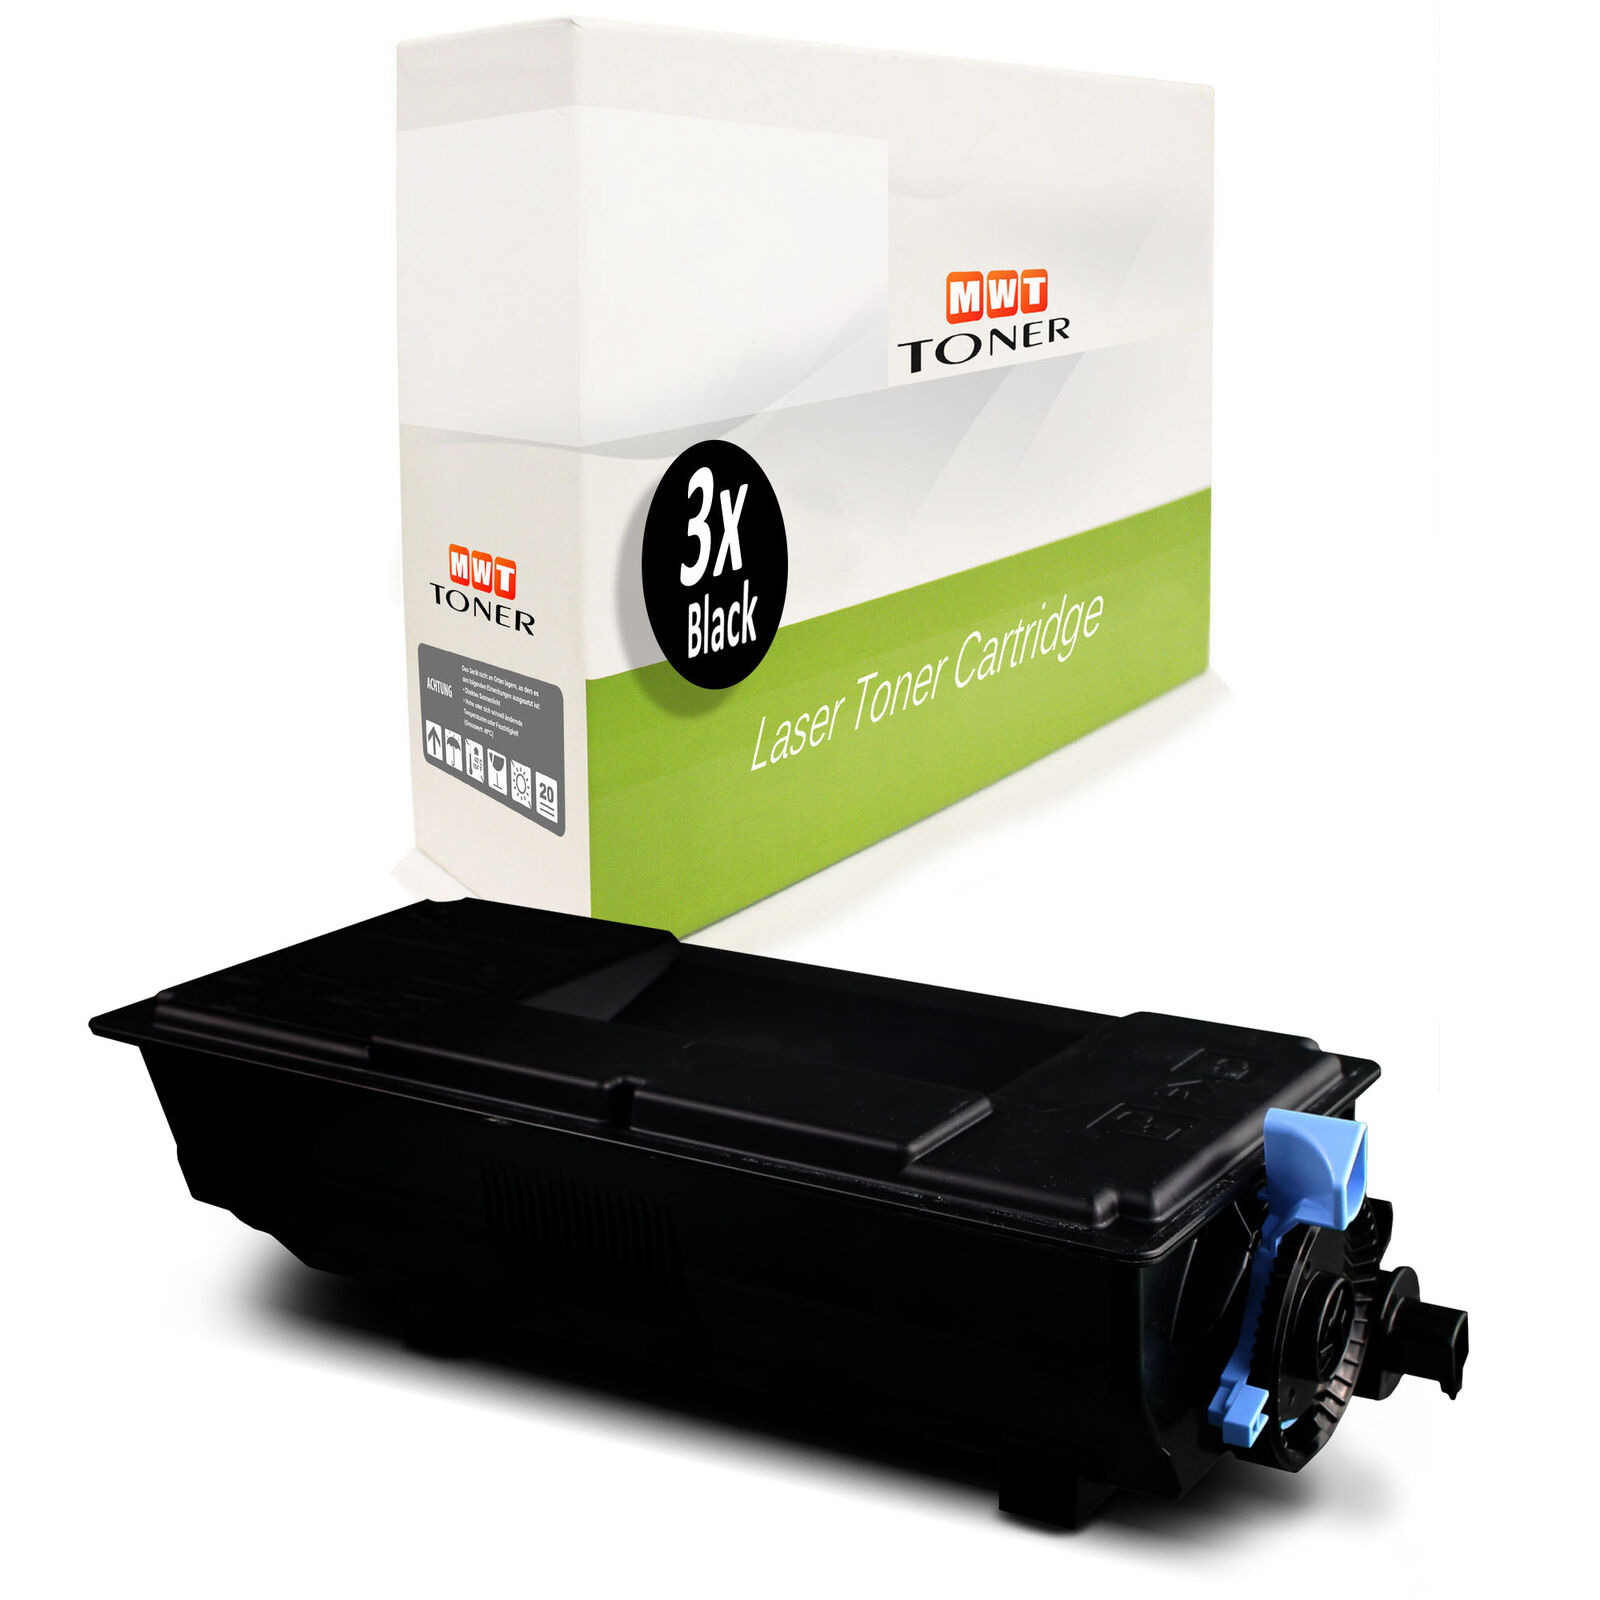 3x MWT Cartridge for Kyocera Ecosys P-3055-dn P-3060-dn P-3045-dn P-3050-dn